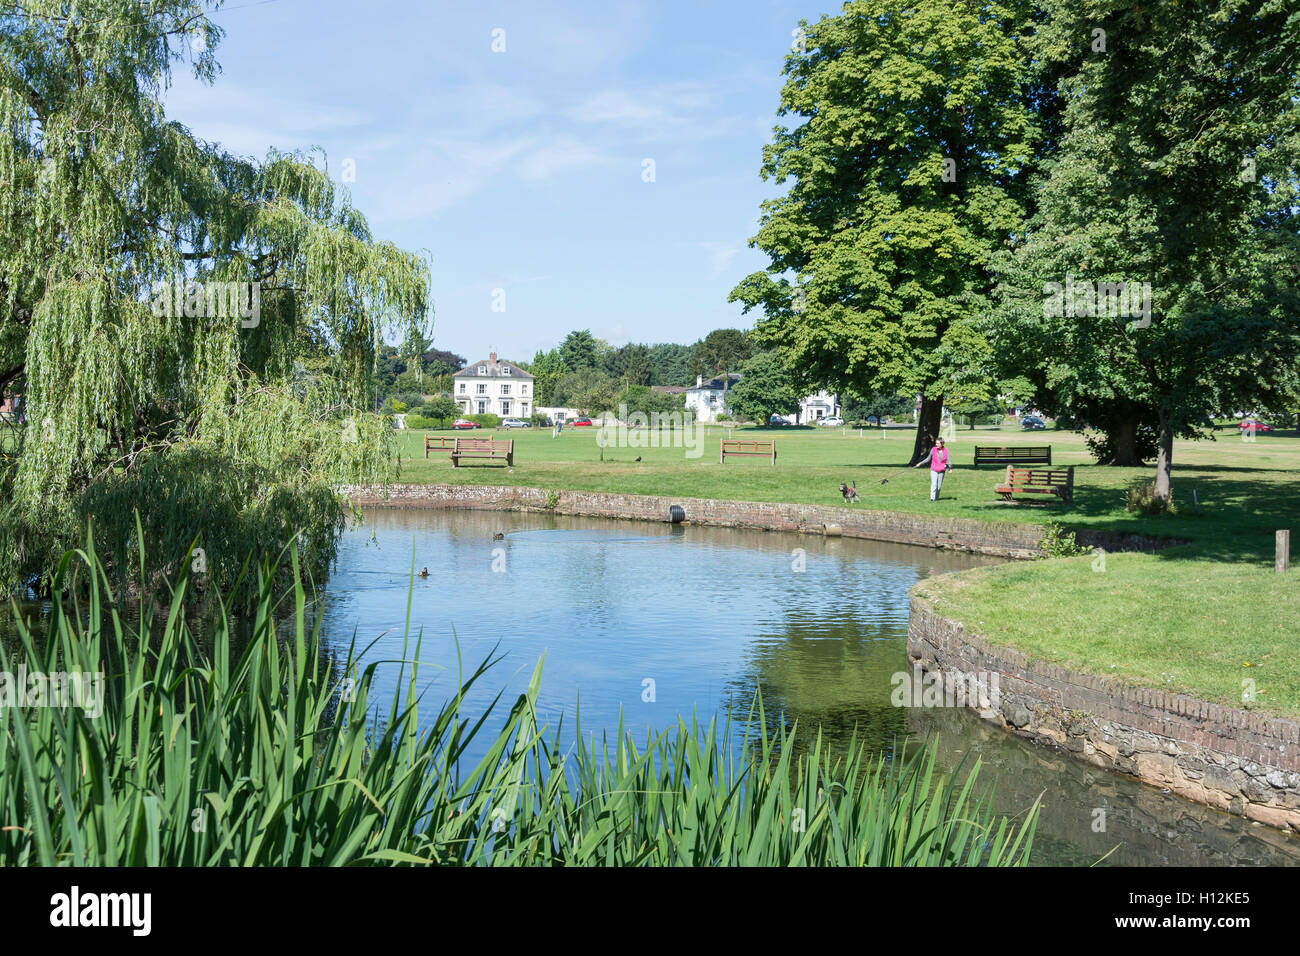 Pond on The Village Green, High Street, Godstone, Surrey, England, United Kingdom Stock Photo